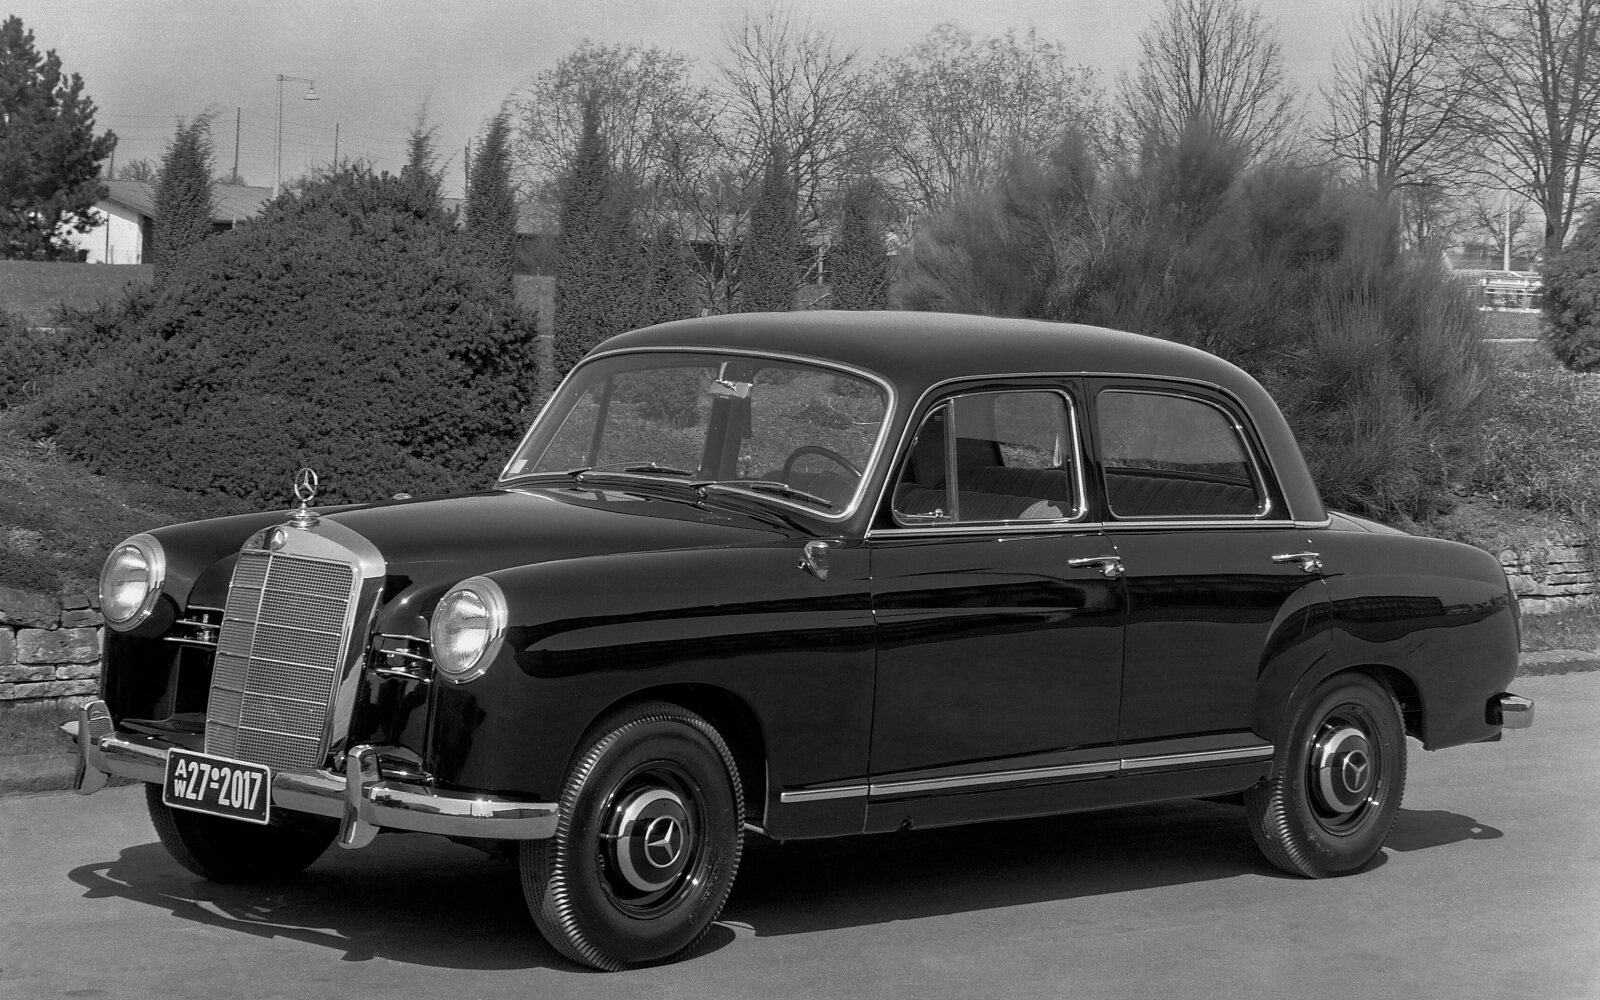 PKW4061 "Ponton Mercedes", four-cylinder models (W 120, W 121), 1953 - 1959